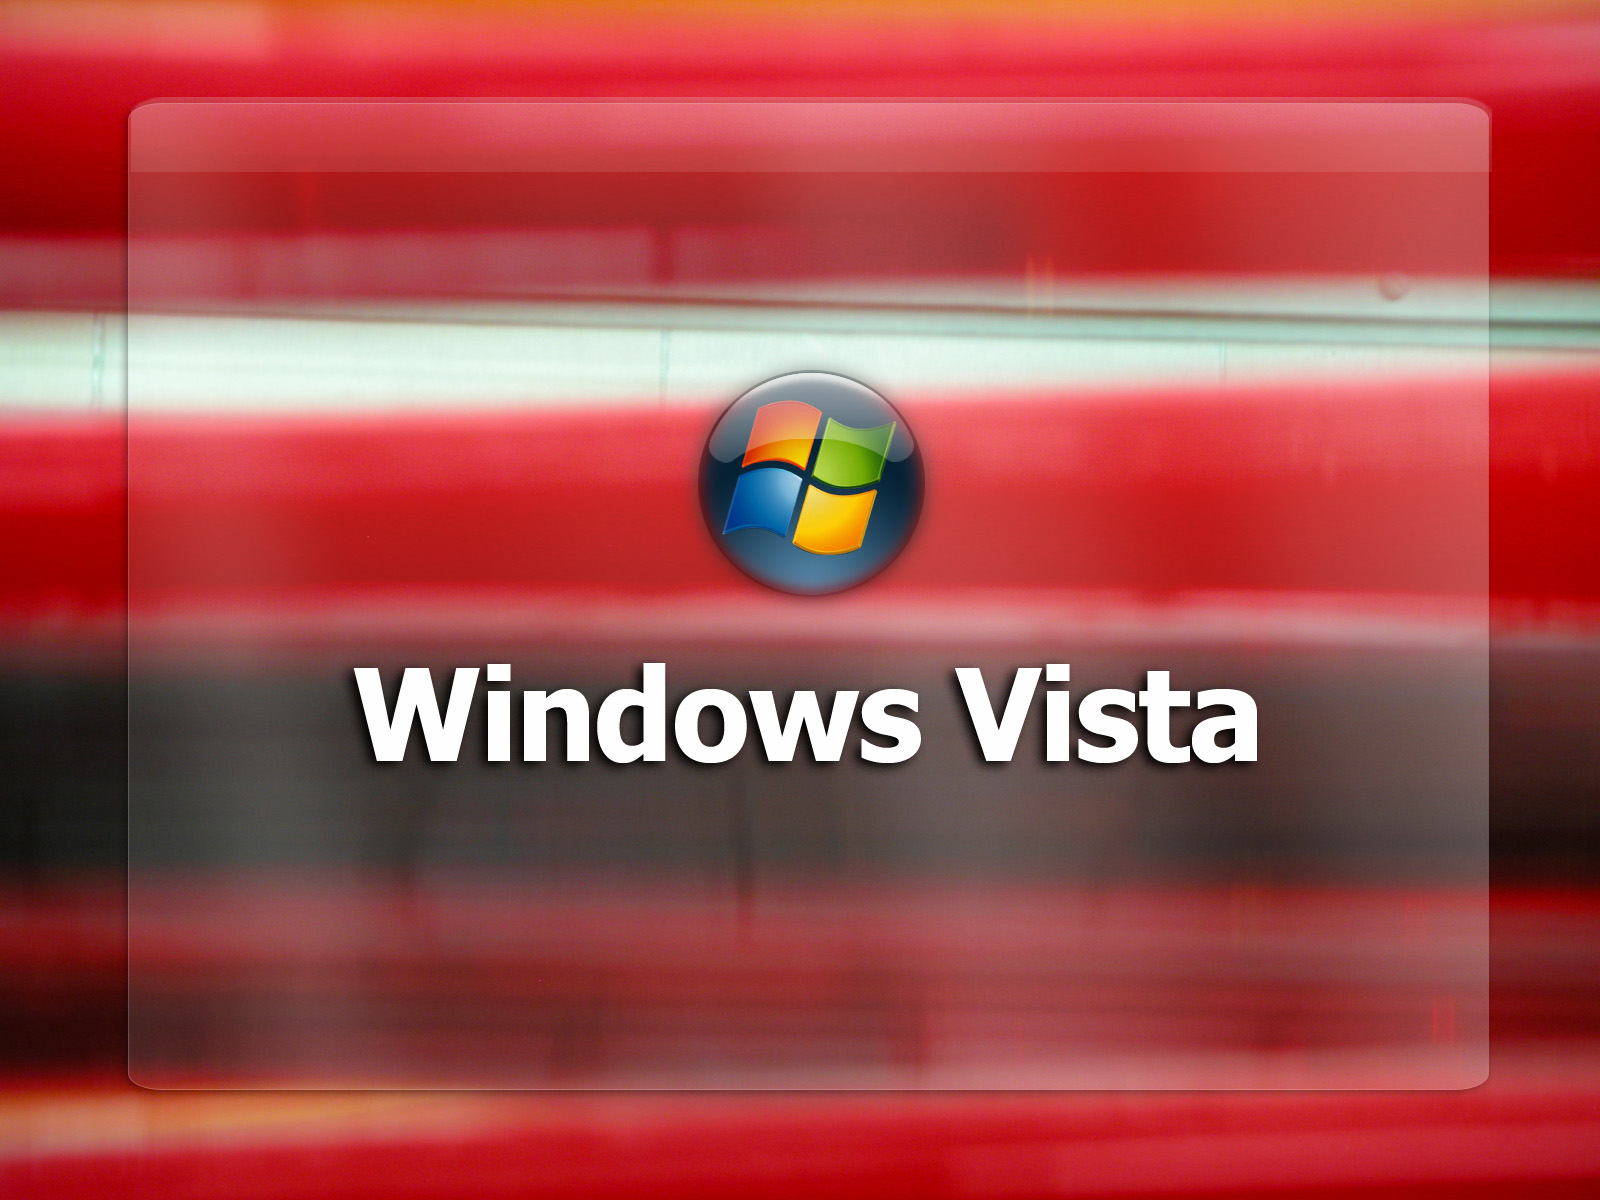 Windows Vista Logos Wallpapers Windows 7 Backgrounds